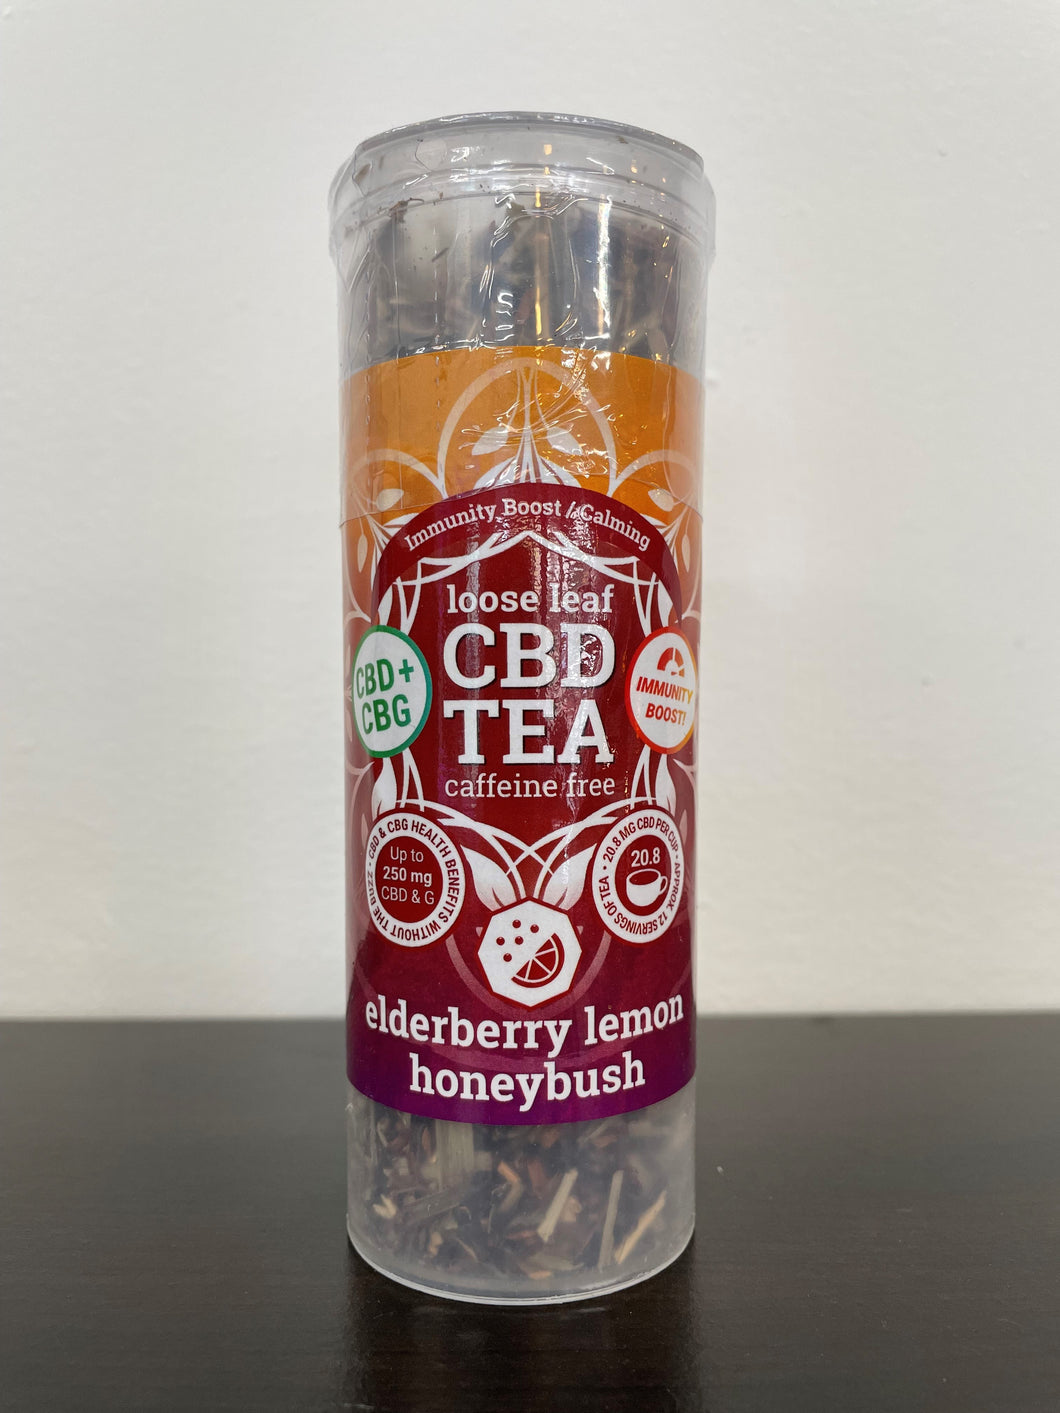 One Love Elderberry Lemon CBD/CBG Loose Leaf Tea